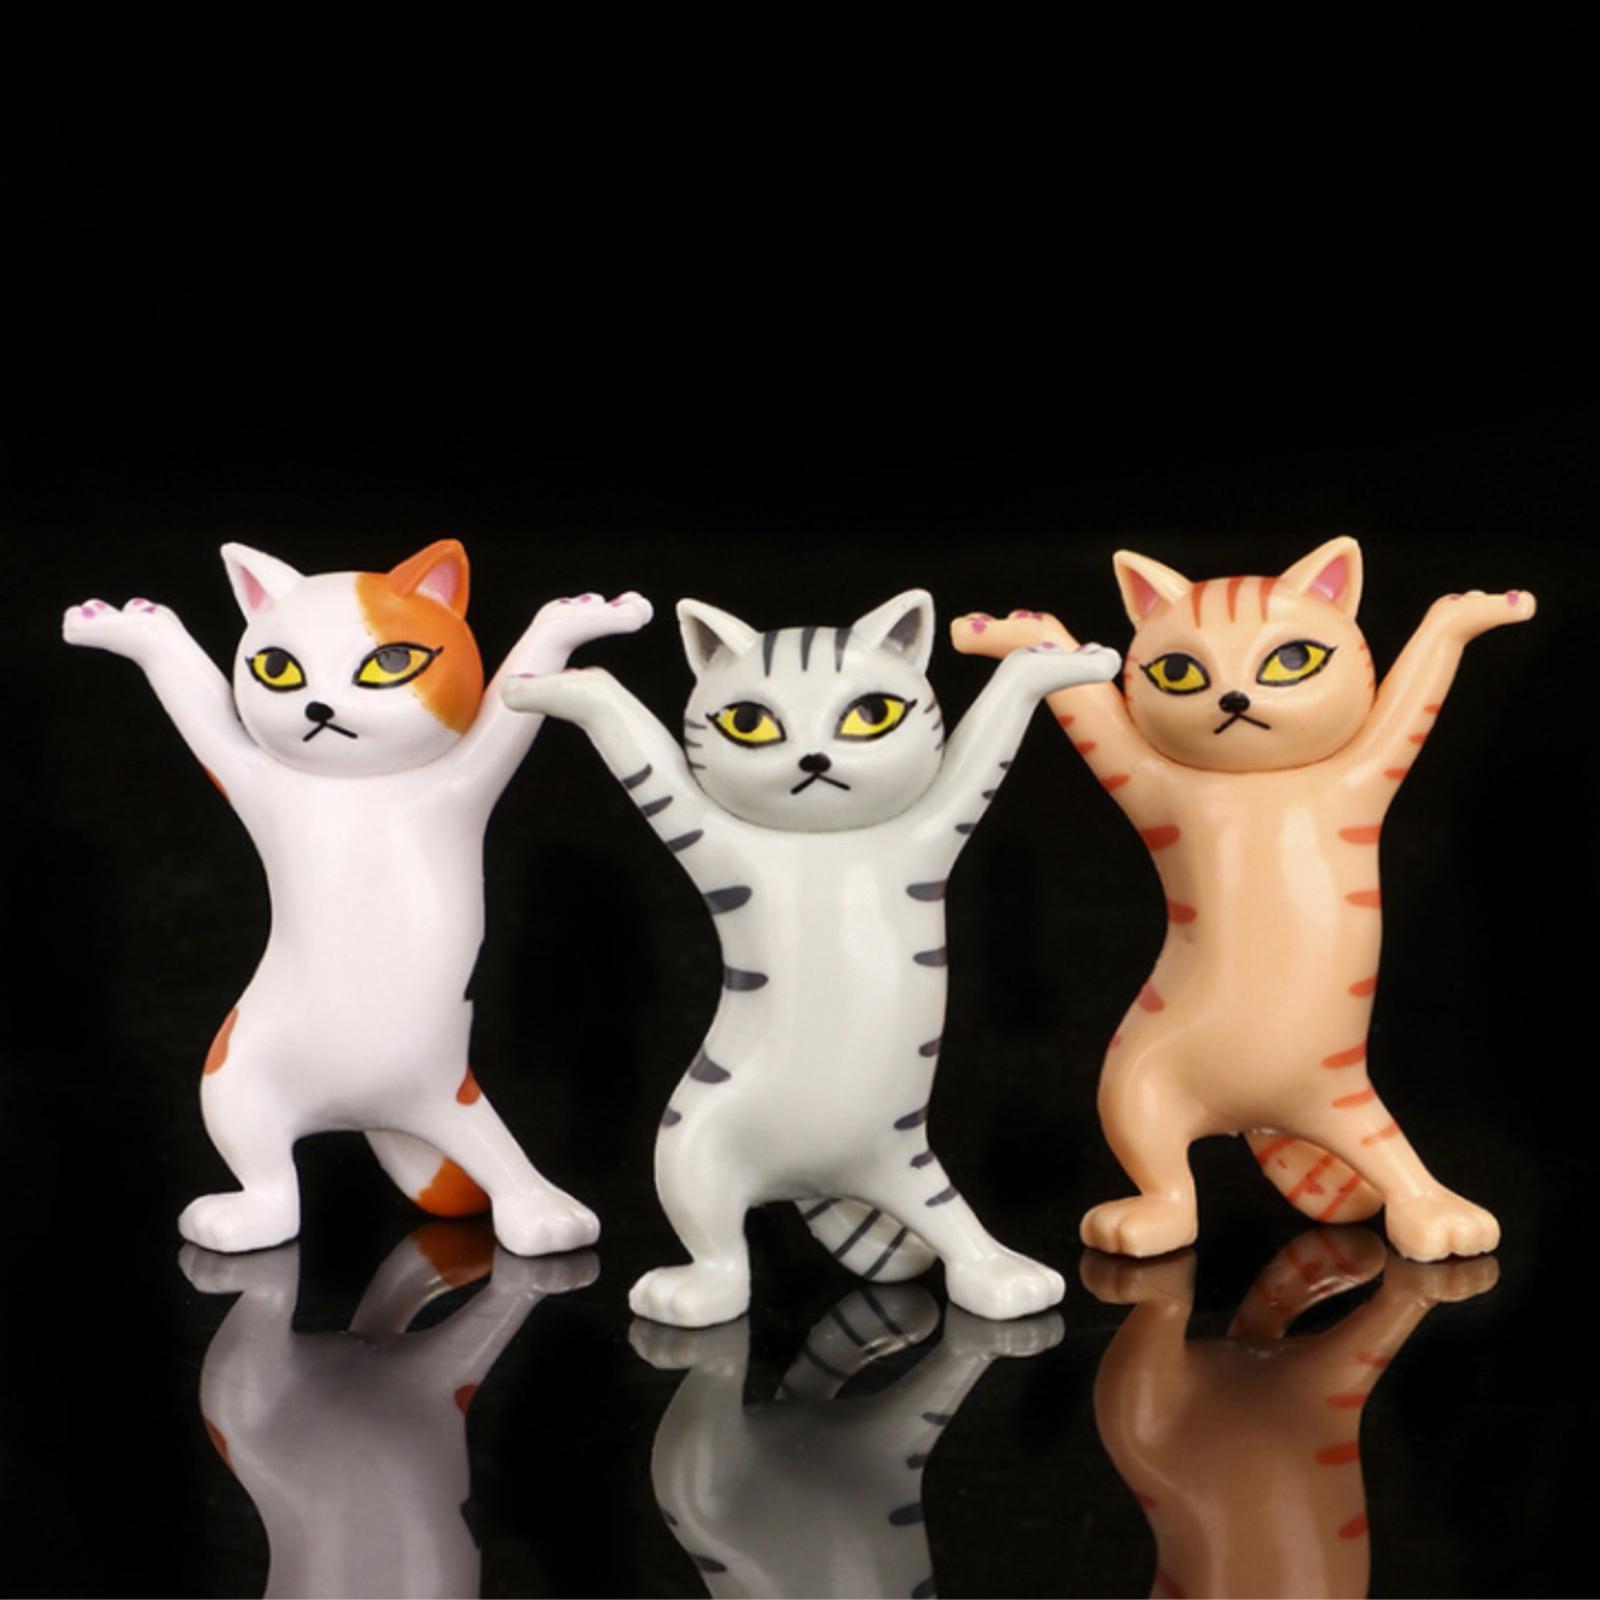 Dancing Cute Cats Figure Ornament Tabletop Sculpture Decoration White